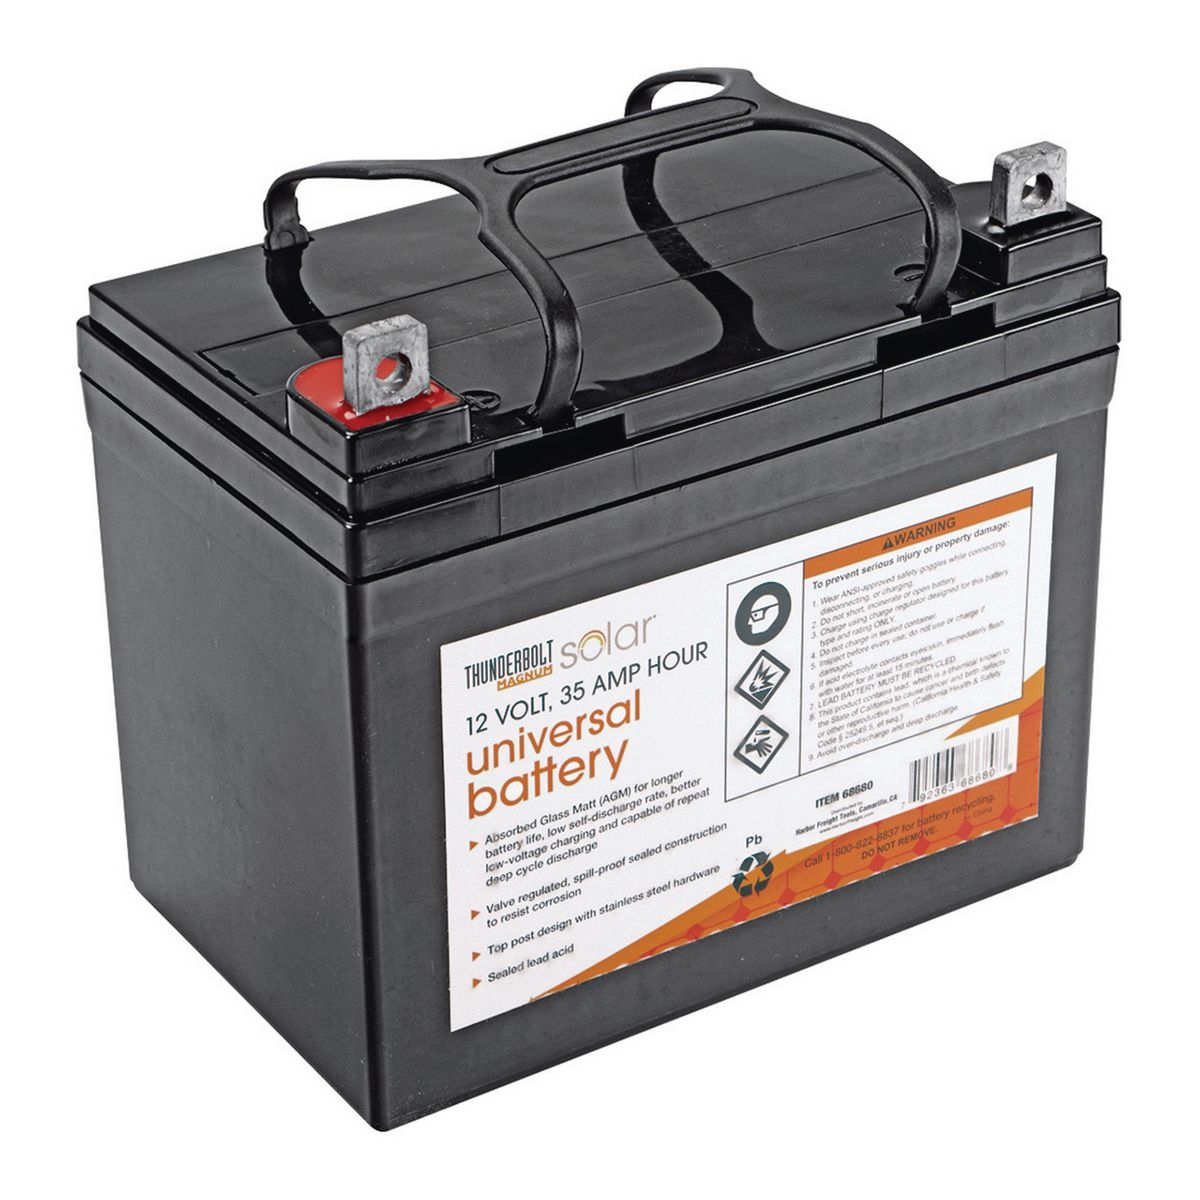 THUNDERBOLT 12 Volt 35 Amp Hour Sealed Lead Acid Battery - Item 64102 / 56770 / 68680